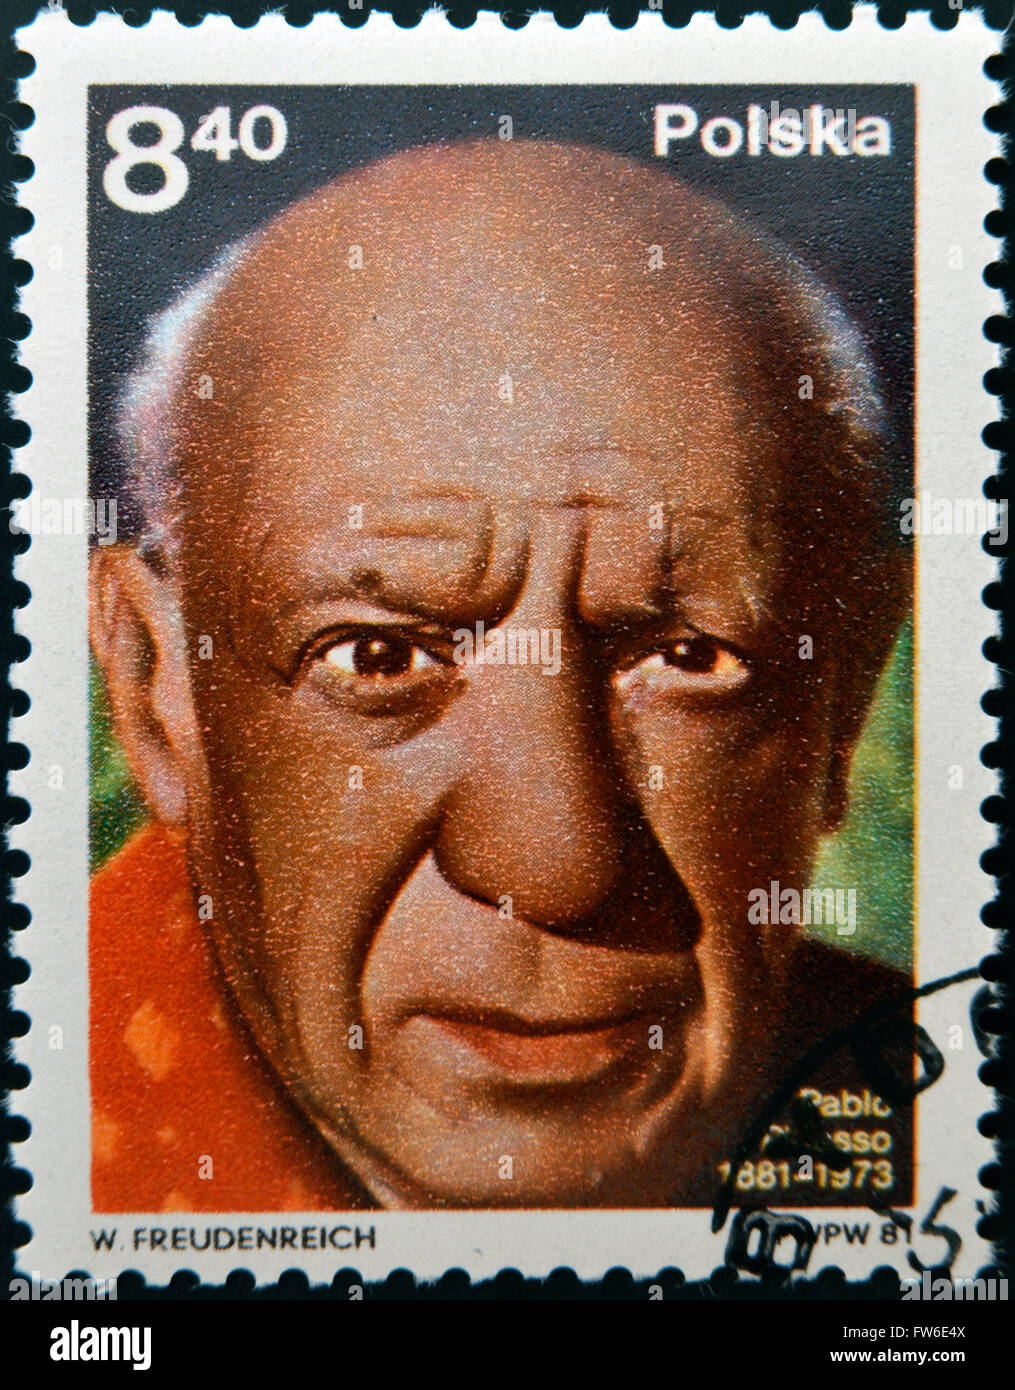 Pologne - circa 1981 : timbre imprimé en Pologne montre Pablo Picasso (1881-1973), artiste, circa 1981 Banque D'Images